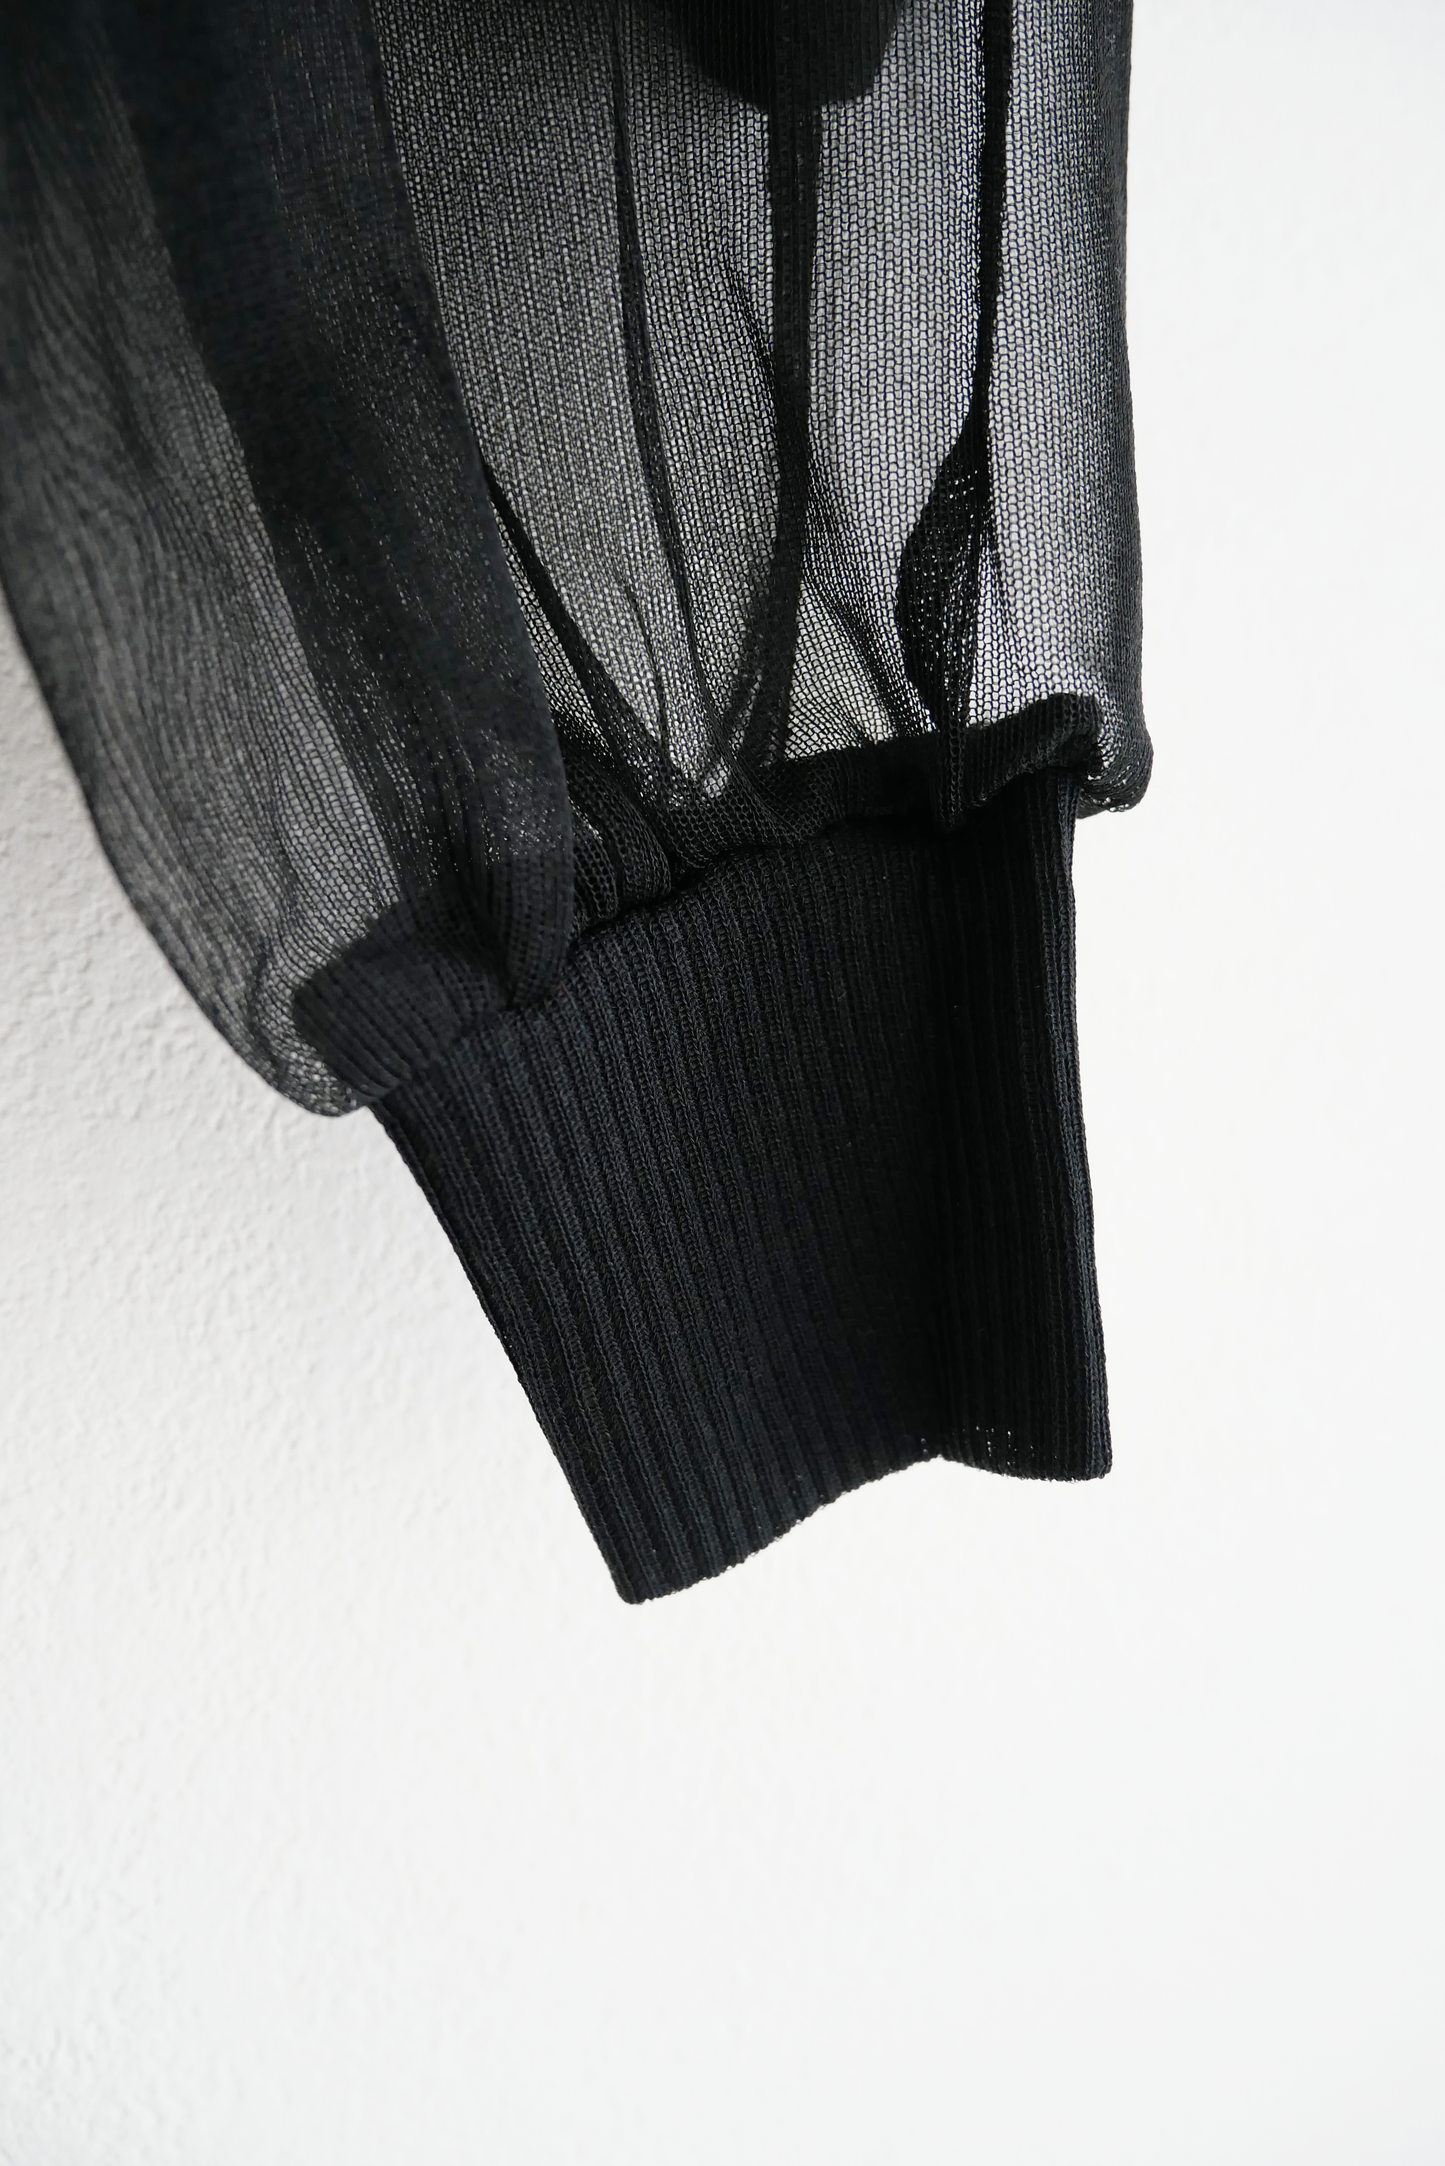 sheer knit transform tee / black